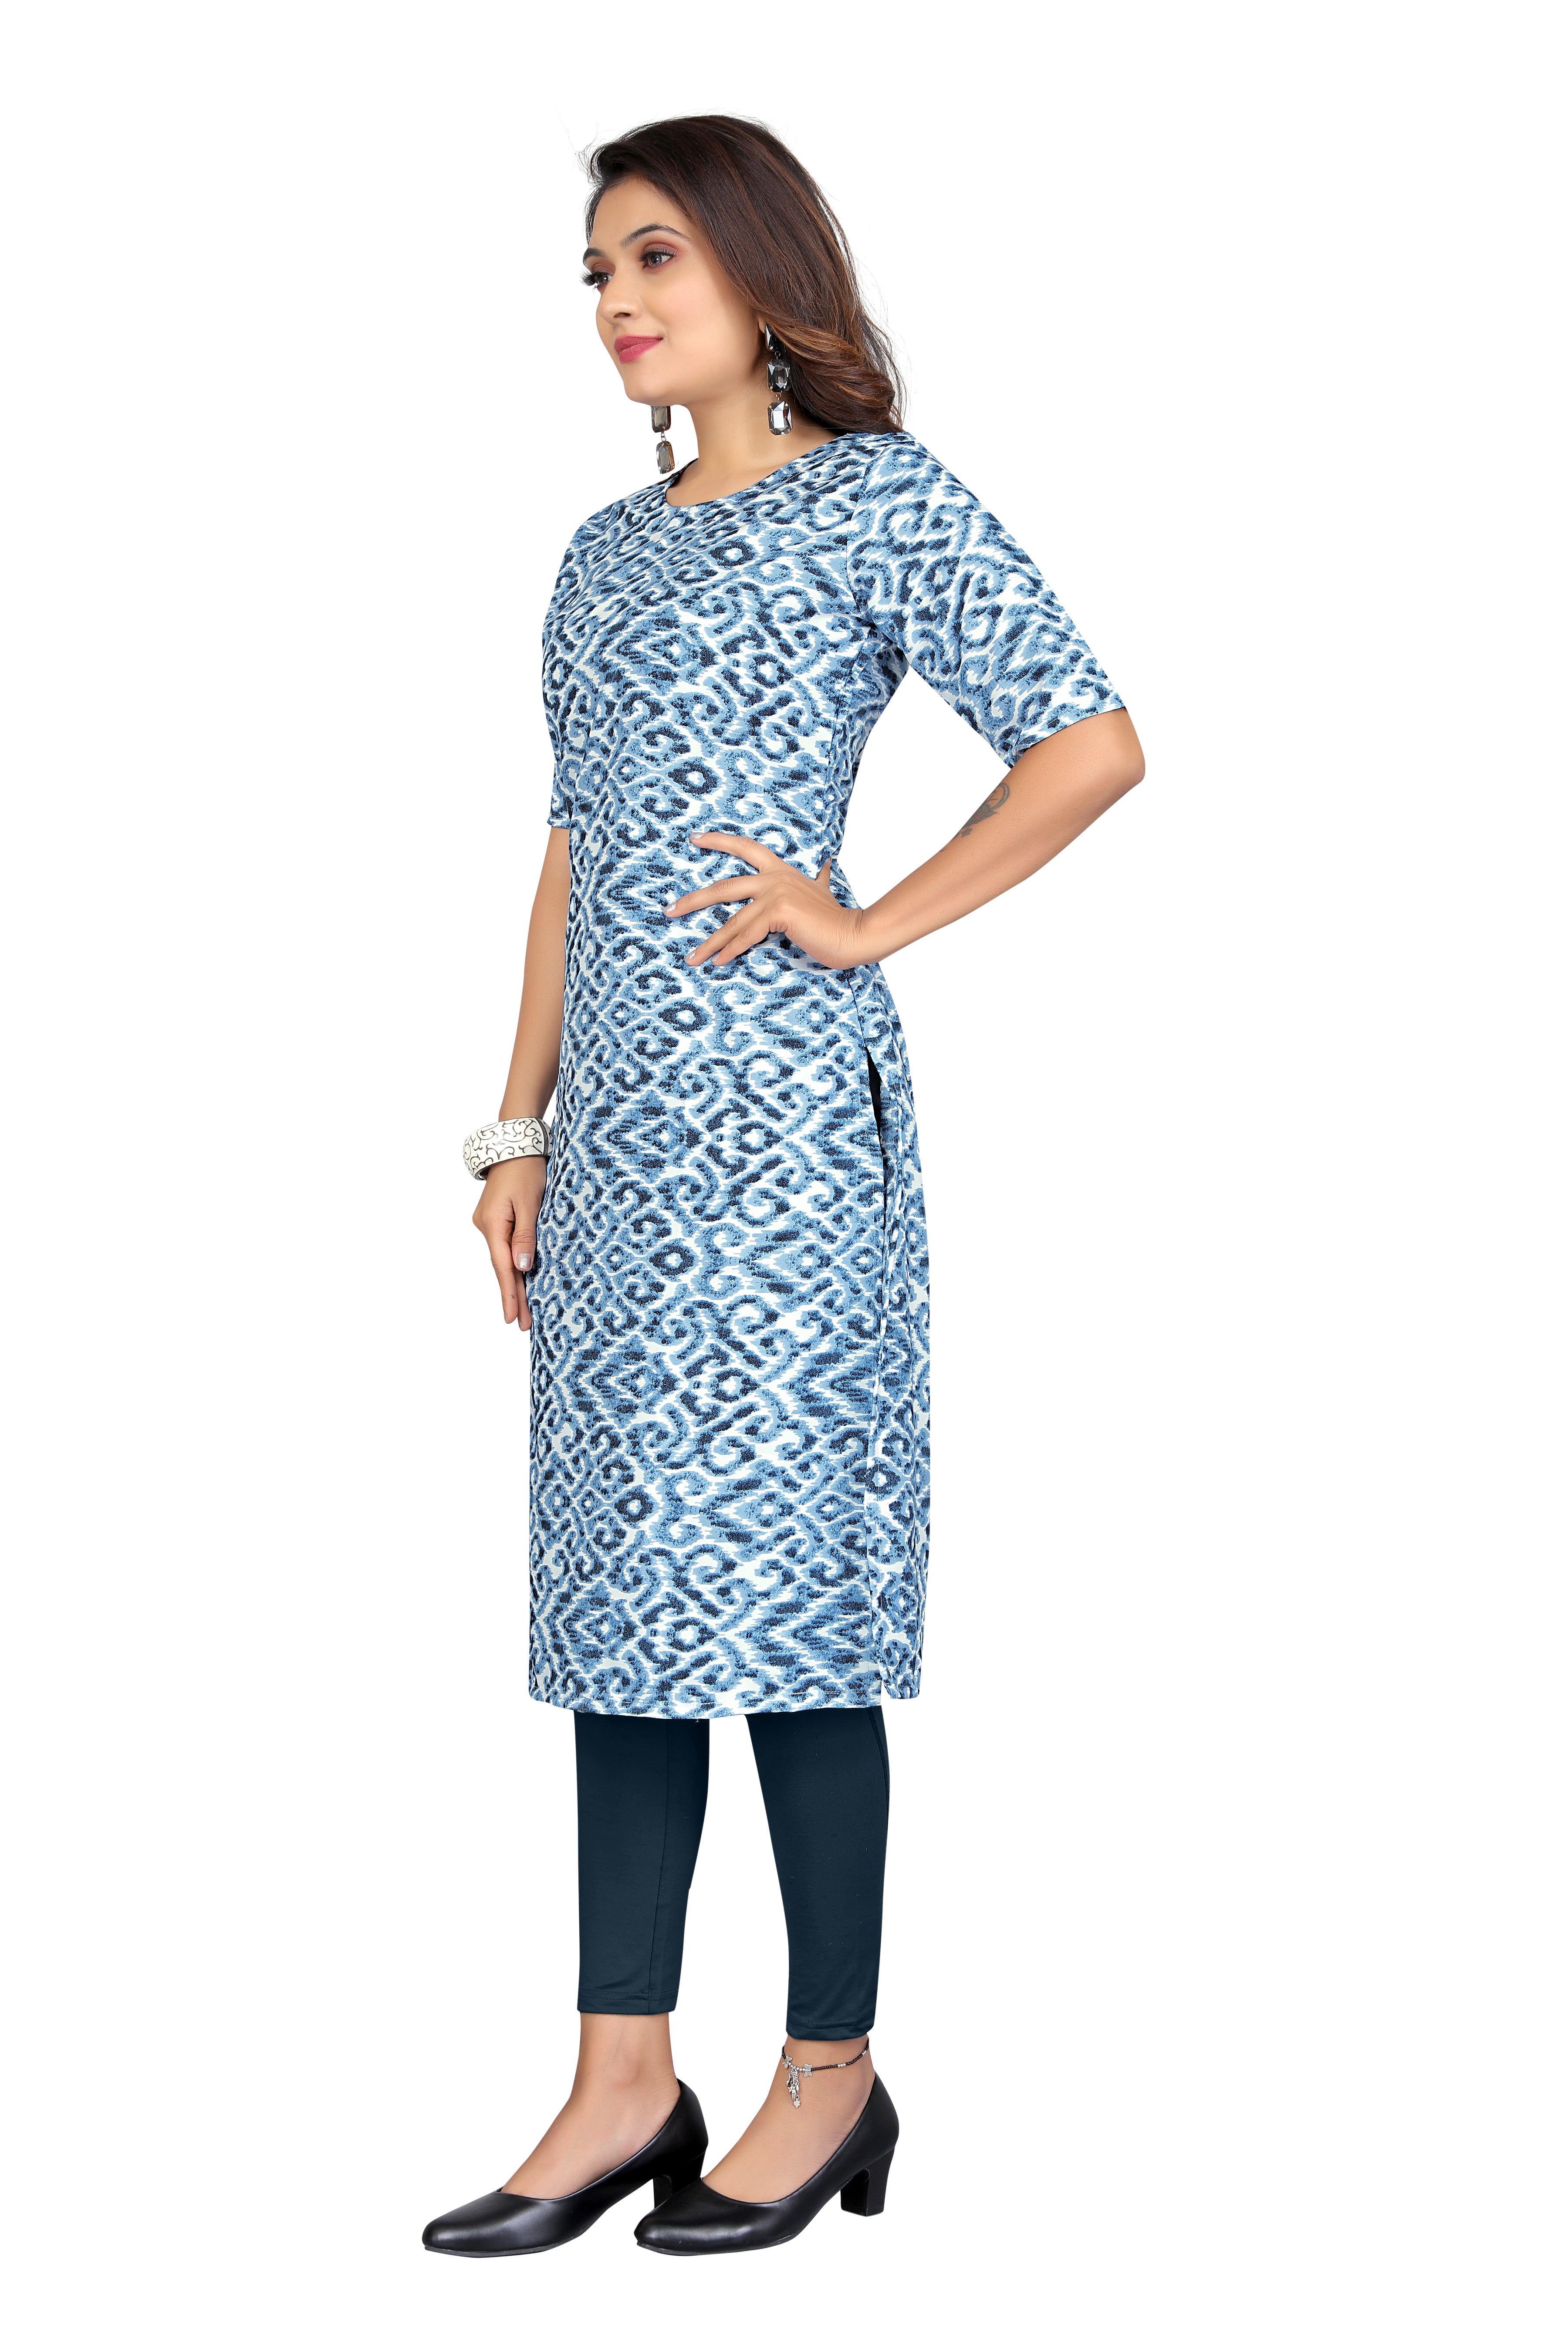 Women's Sky Blue Regulat Wear Digital Printed Crepe Kurti  - Fashion Forever